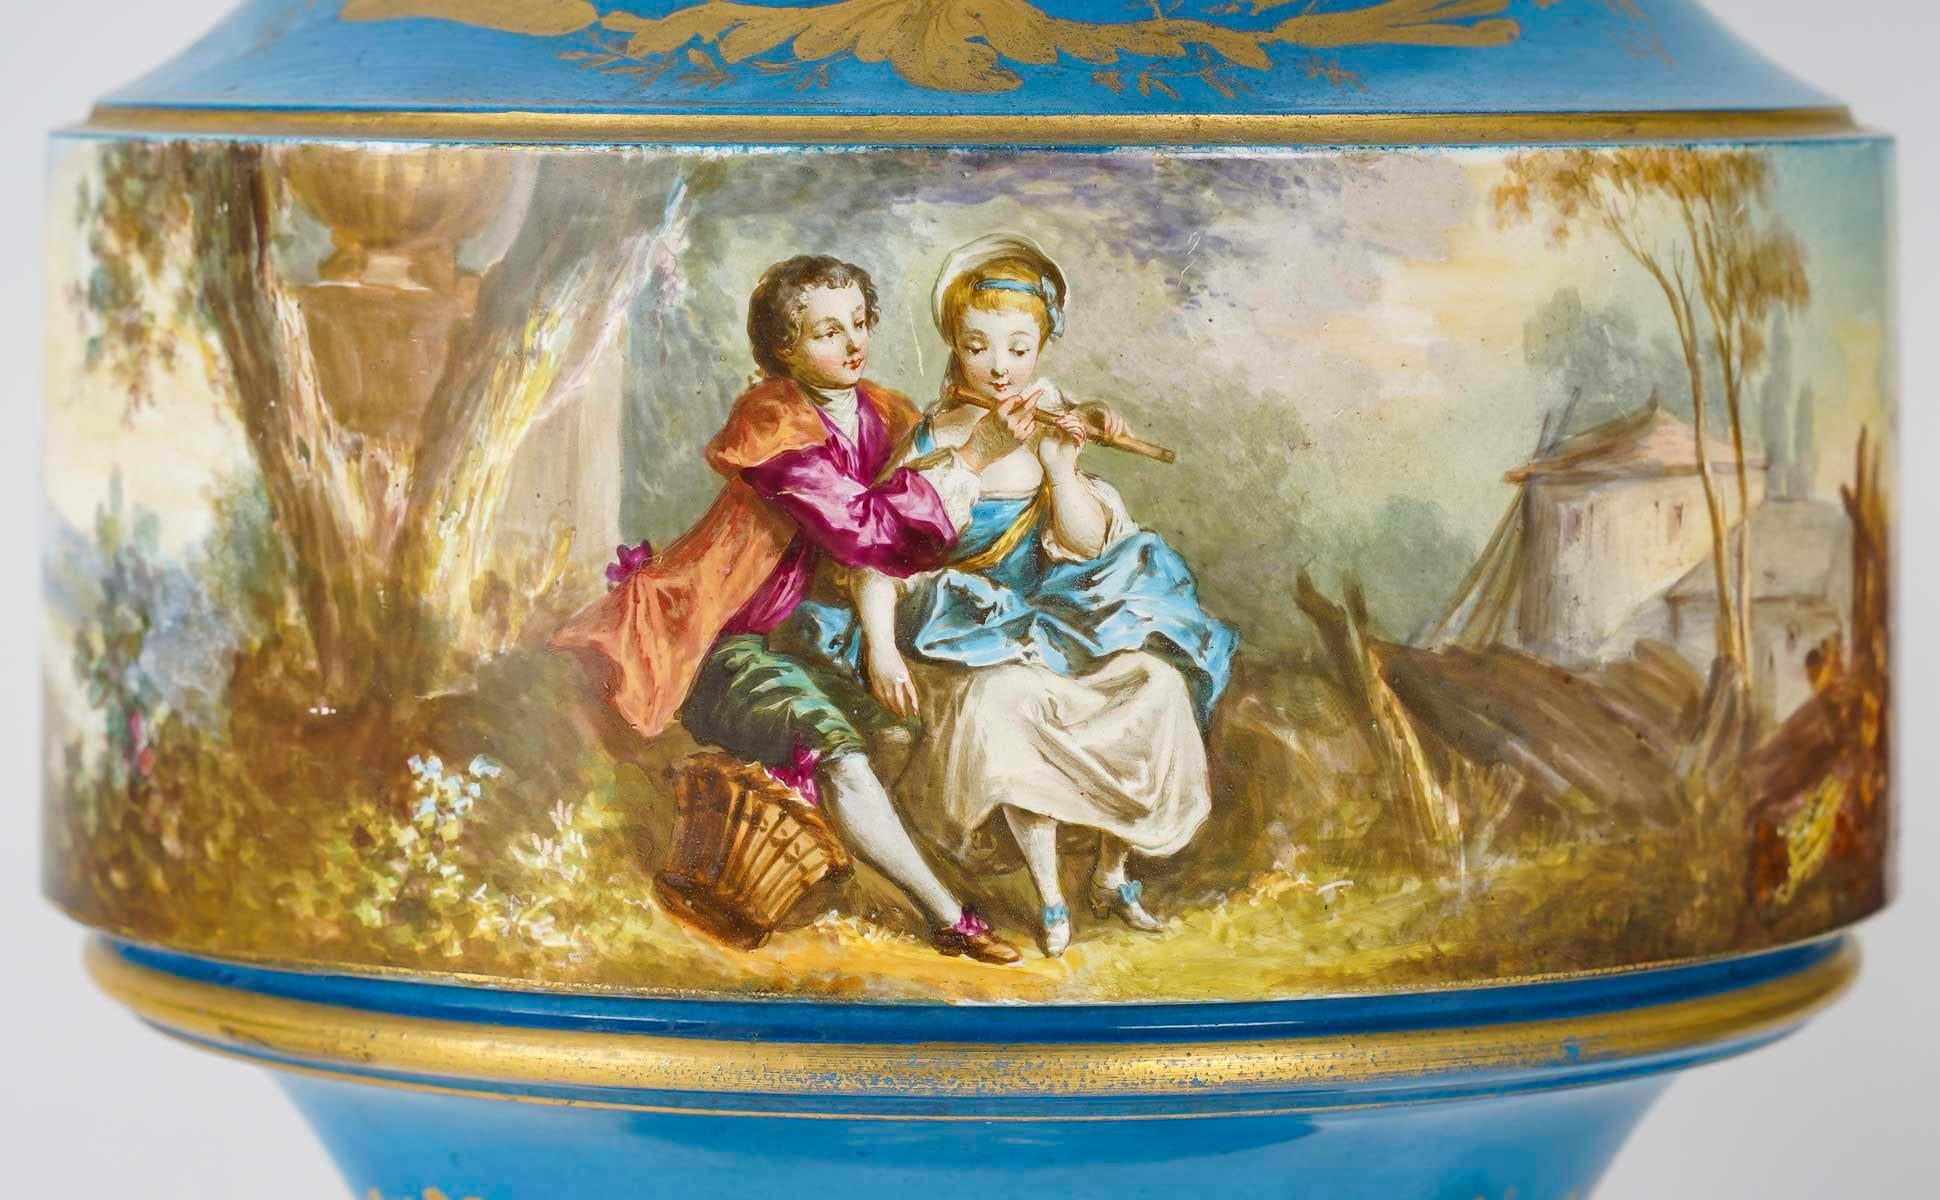 Paar Vasen aus Sèvres-Porzellan, Periode Napoleon III, 19.

Ein Paar Sèvres-Porzellanvasen, reich verziert mit Medaillons und galanten Szenen, Periode Napoleon III, 19.
h: 41cm, T: 21cm